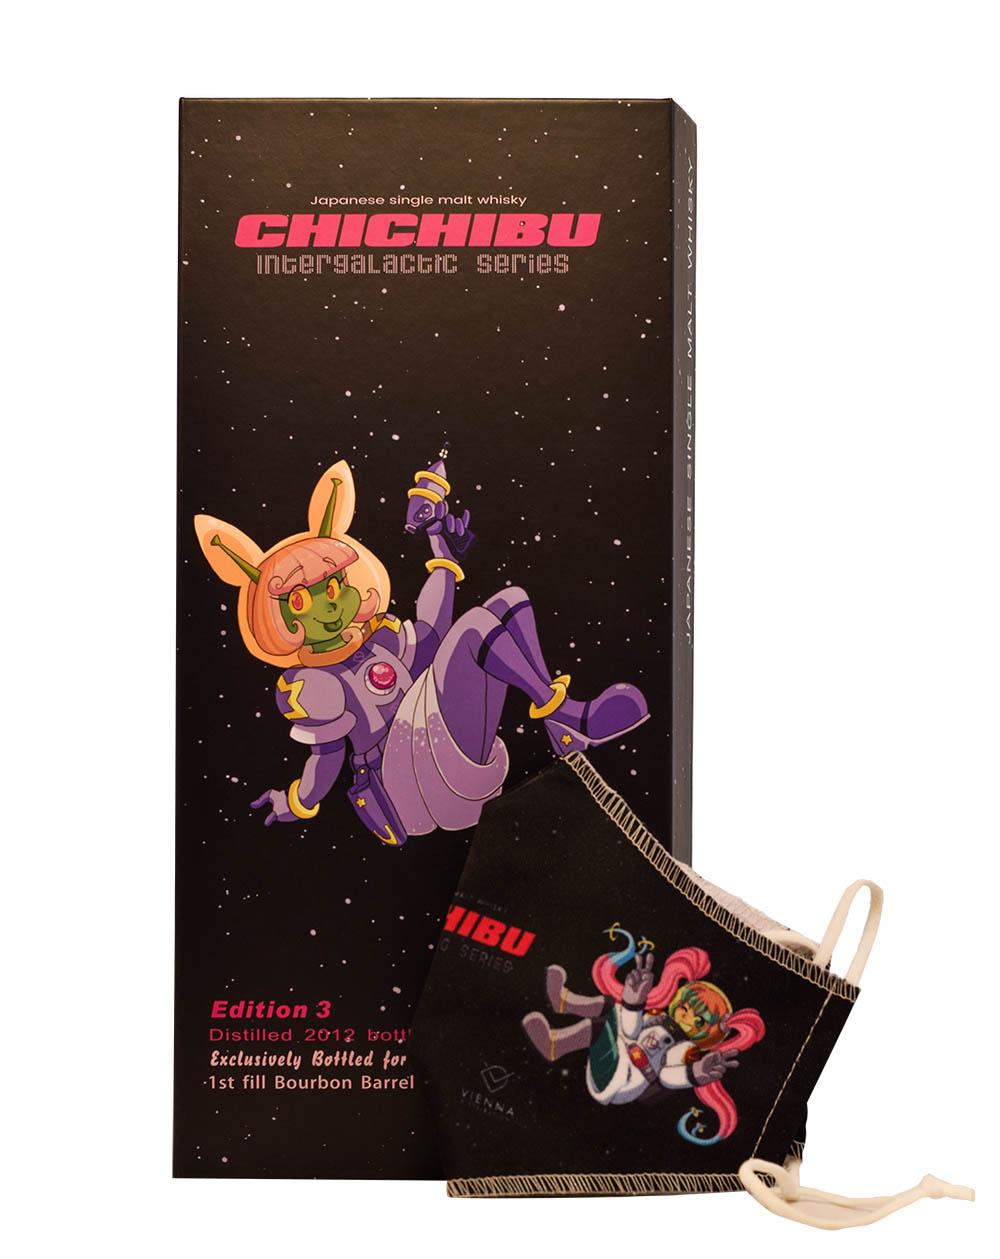 Chichibu 2012 - Intergalactic Series Edition 3 Box Musthave Malts MHM